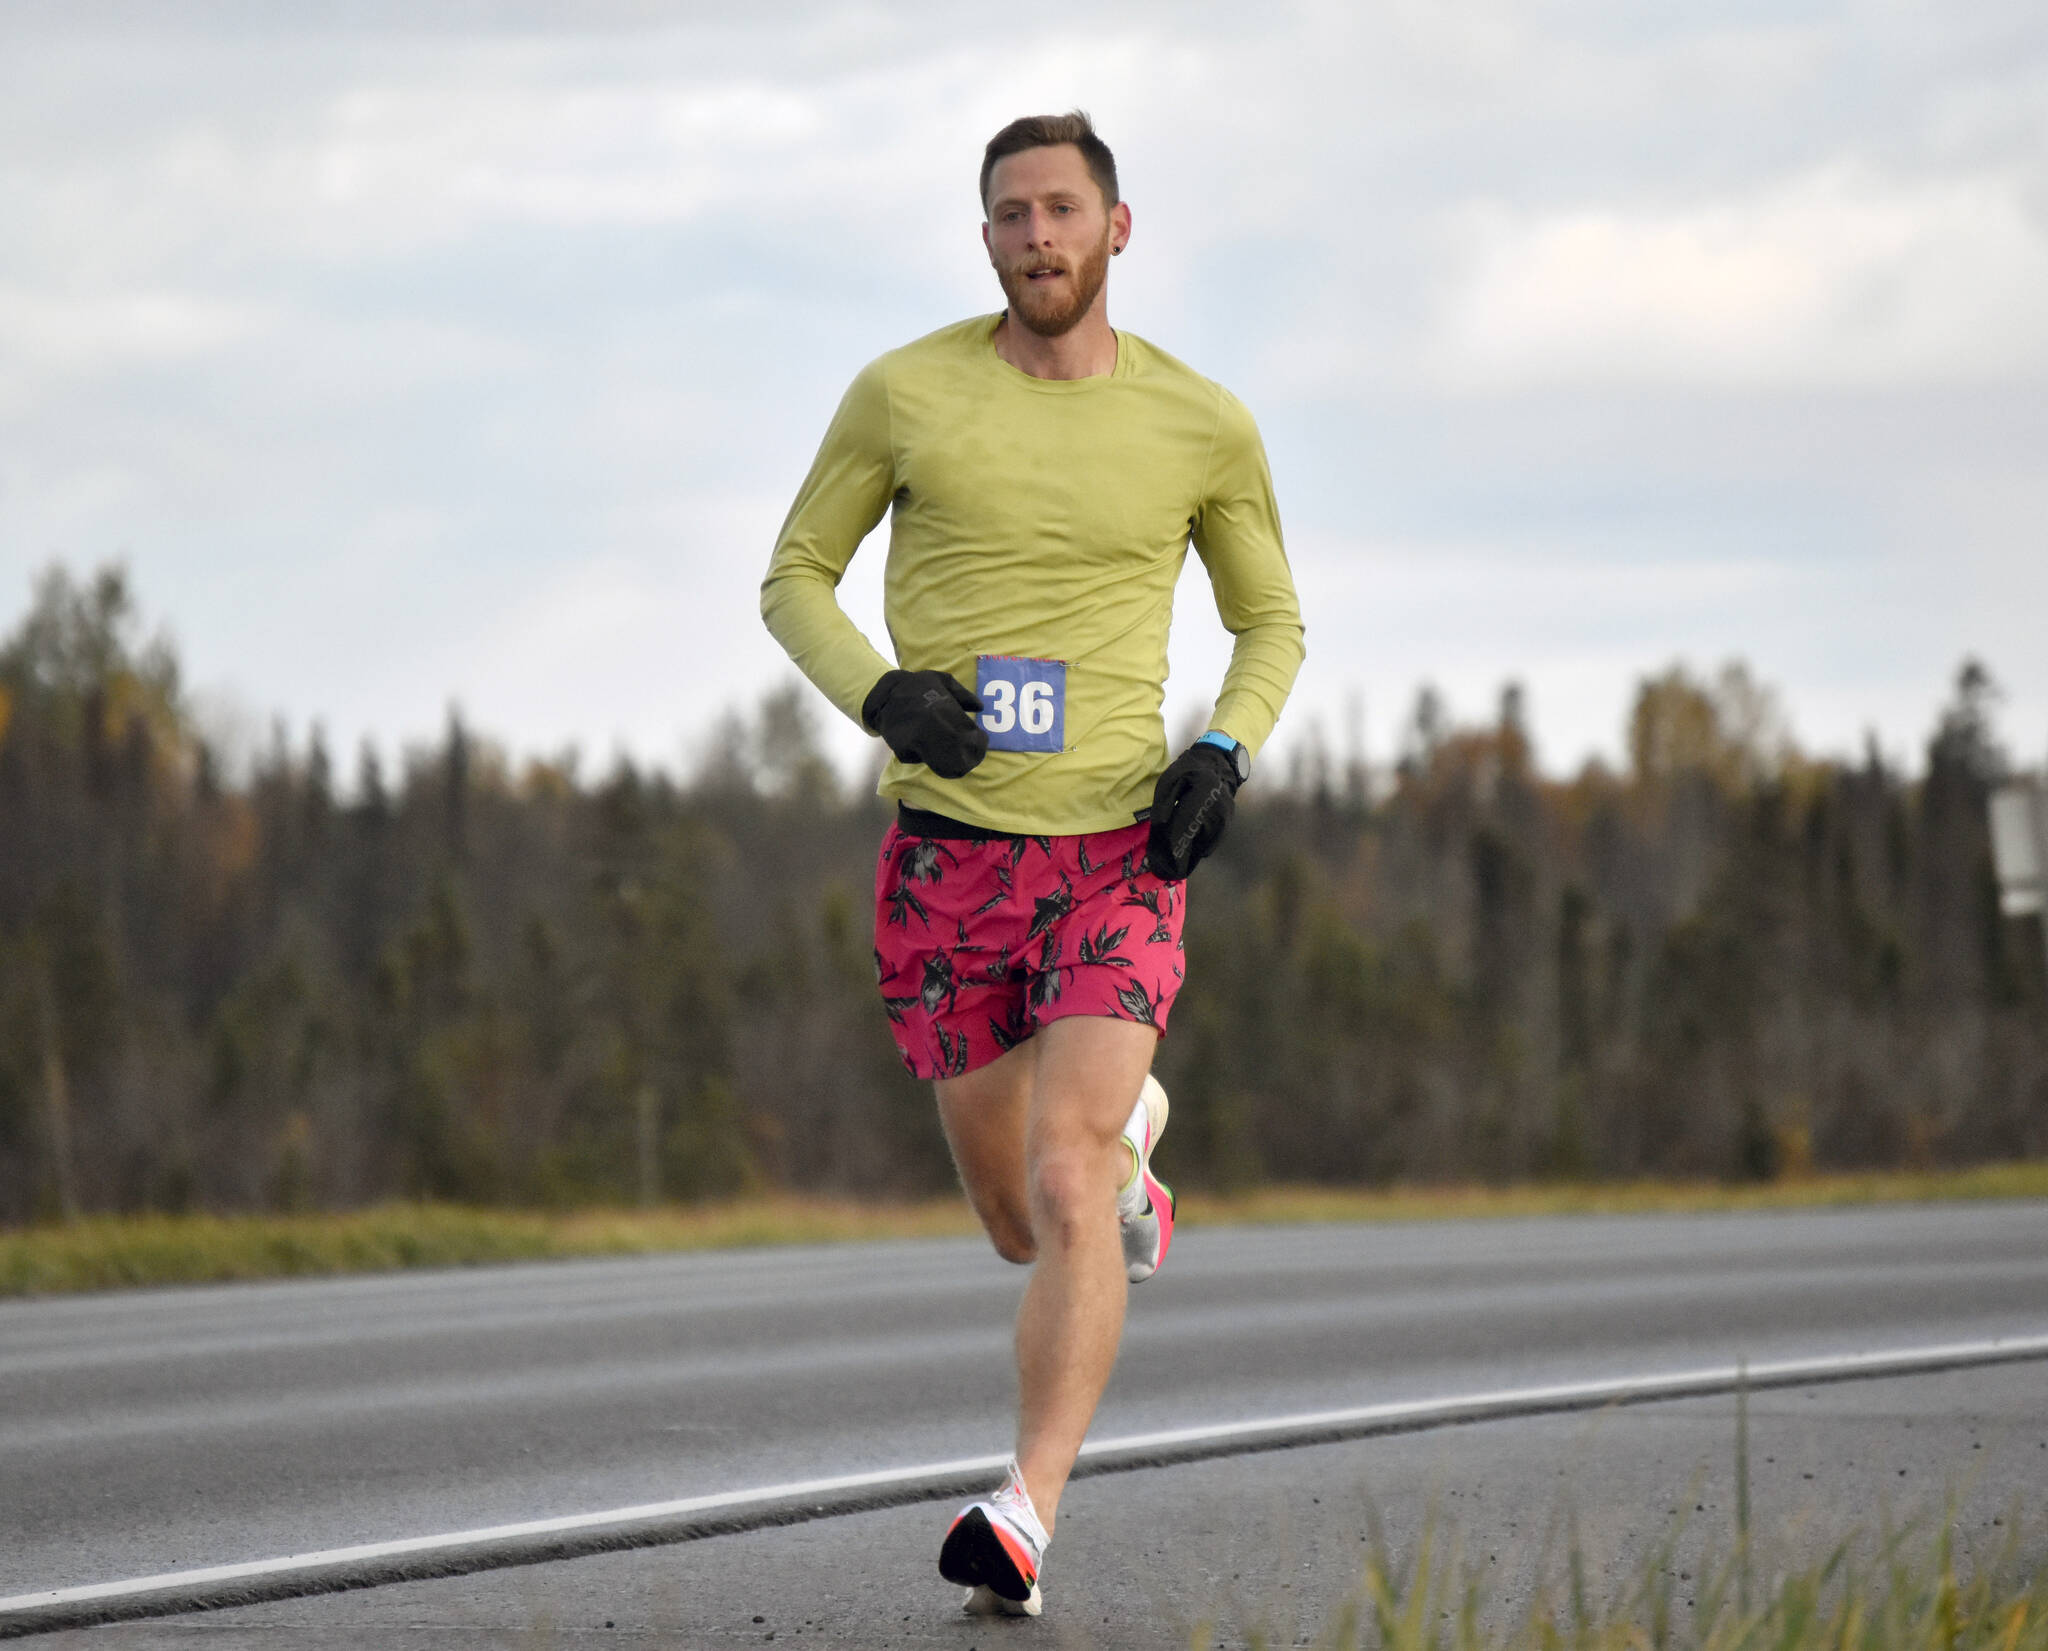 Lars Arneson runs to a victory and new event record in the Kenai River Marathon on Sunday, Sept. 25, 2022, in Kenai, Alaska. (Photo by Jeff Helminiak/Peninsula Clarion)